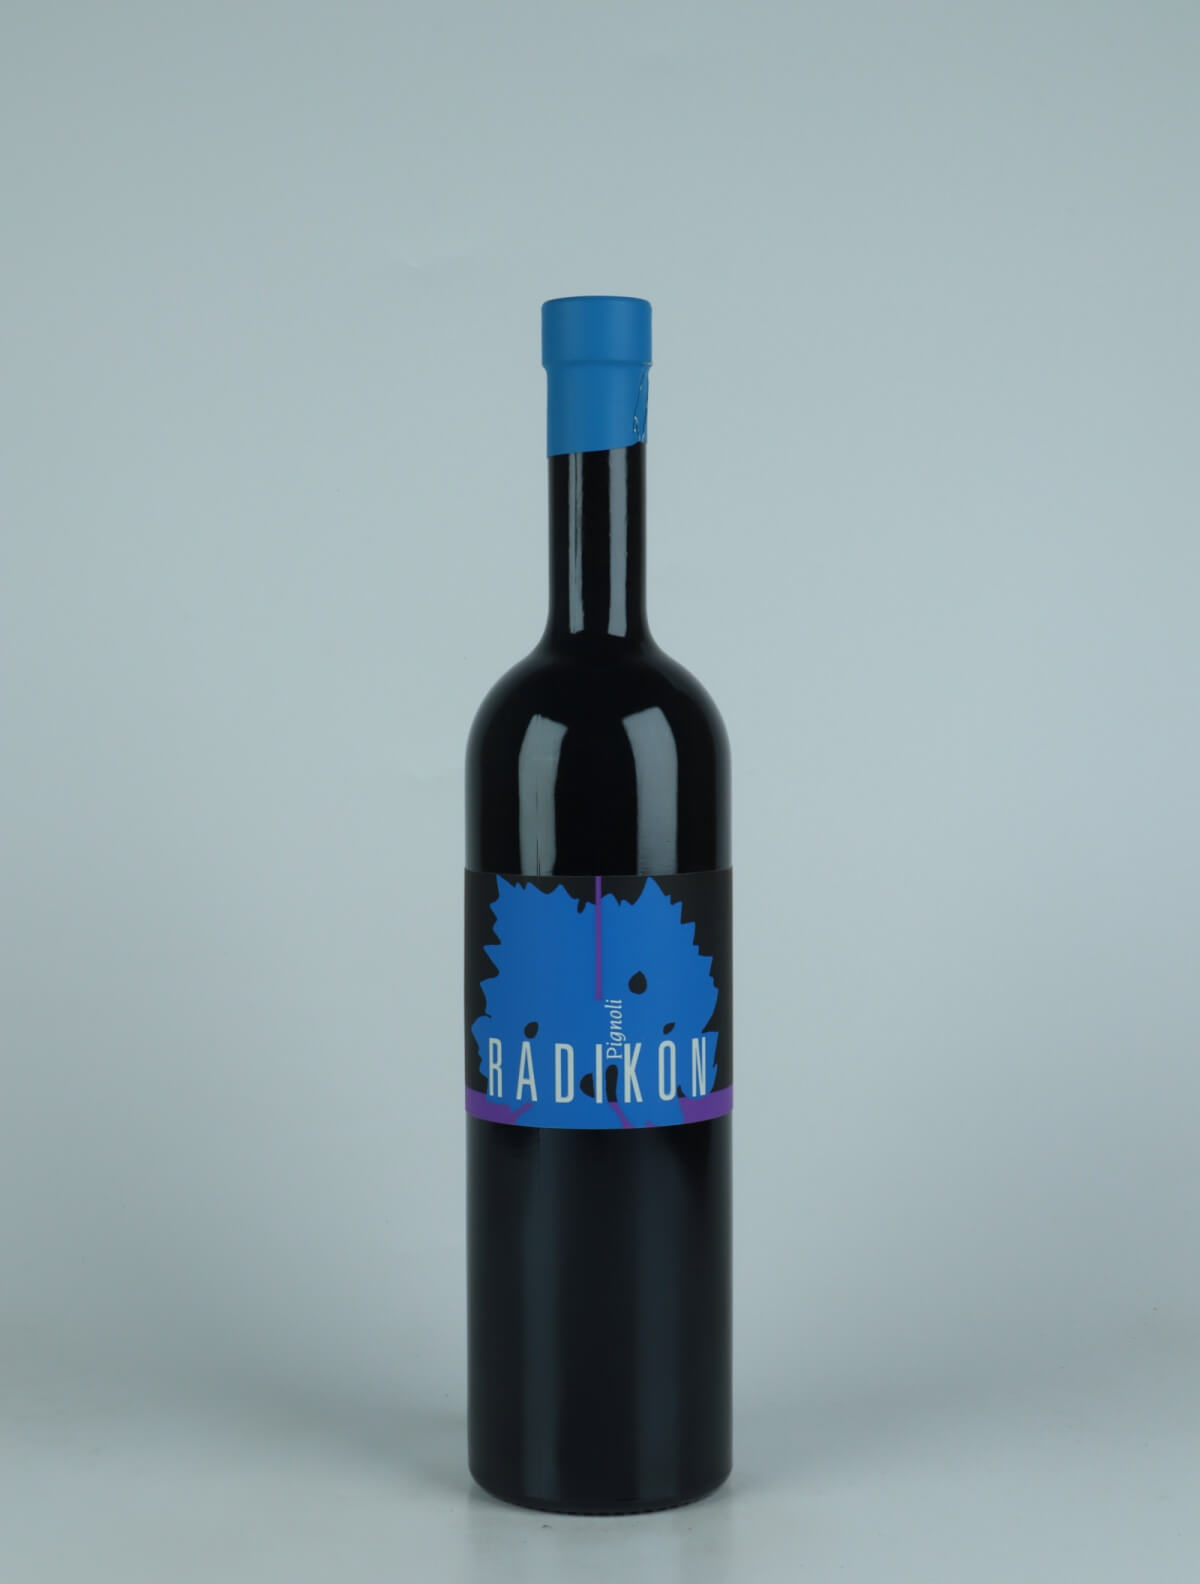 A bottle 2011 Rosso delle Venezie - Pignoli Red wine from Radikon, Friuli in Italy